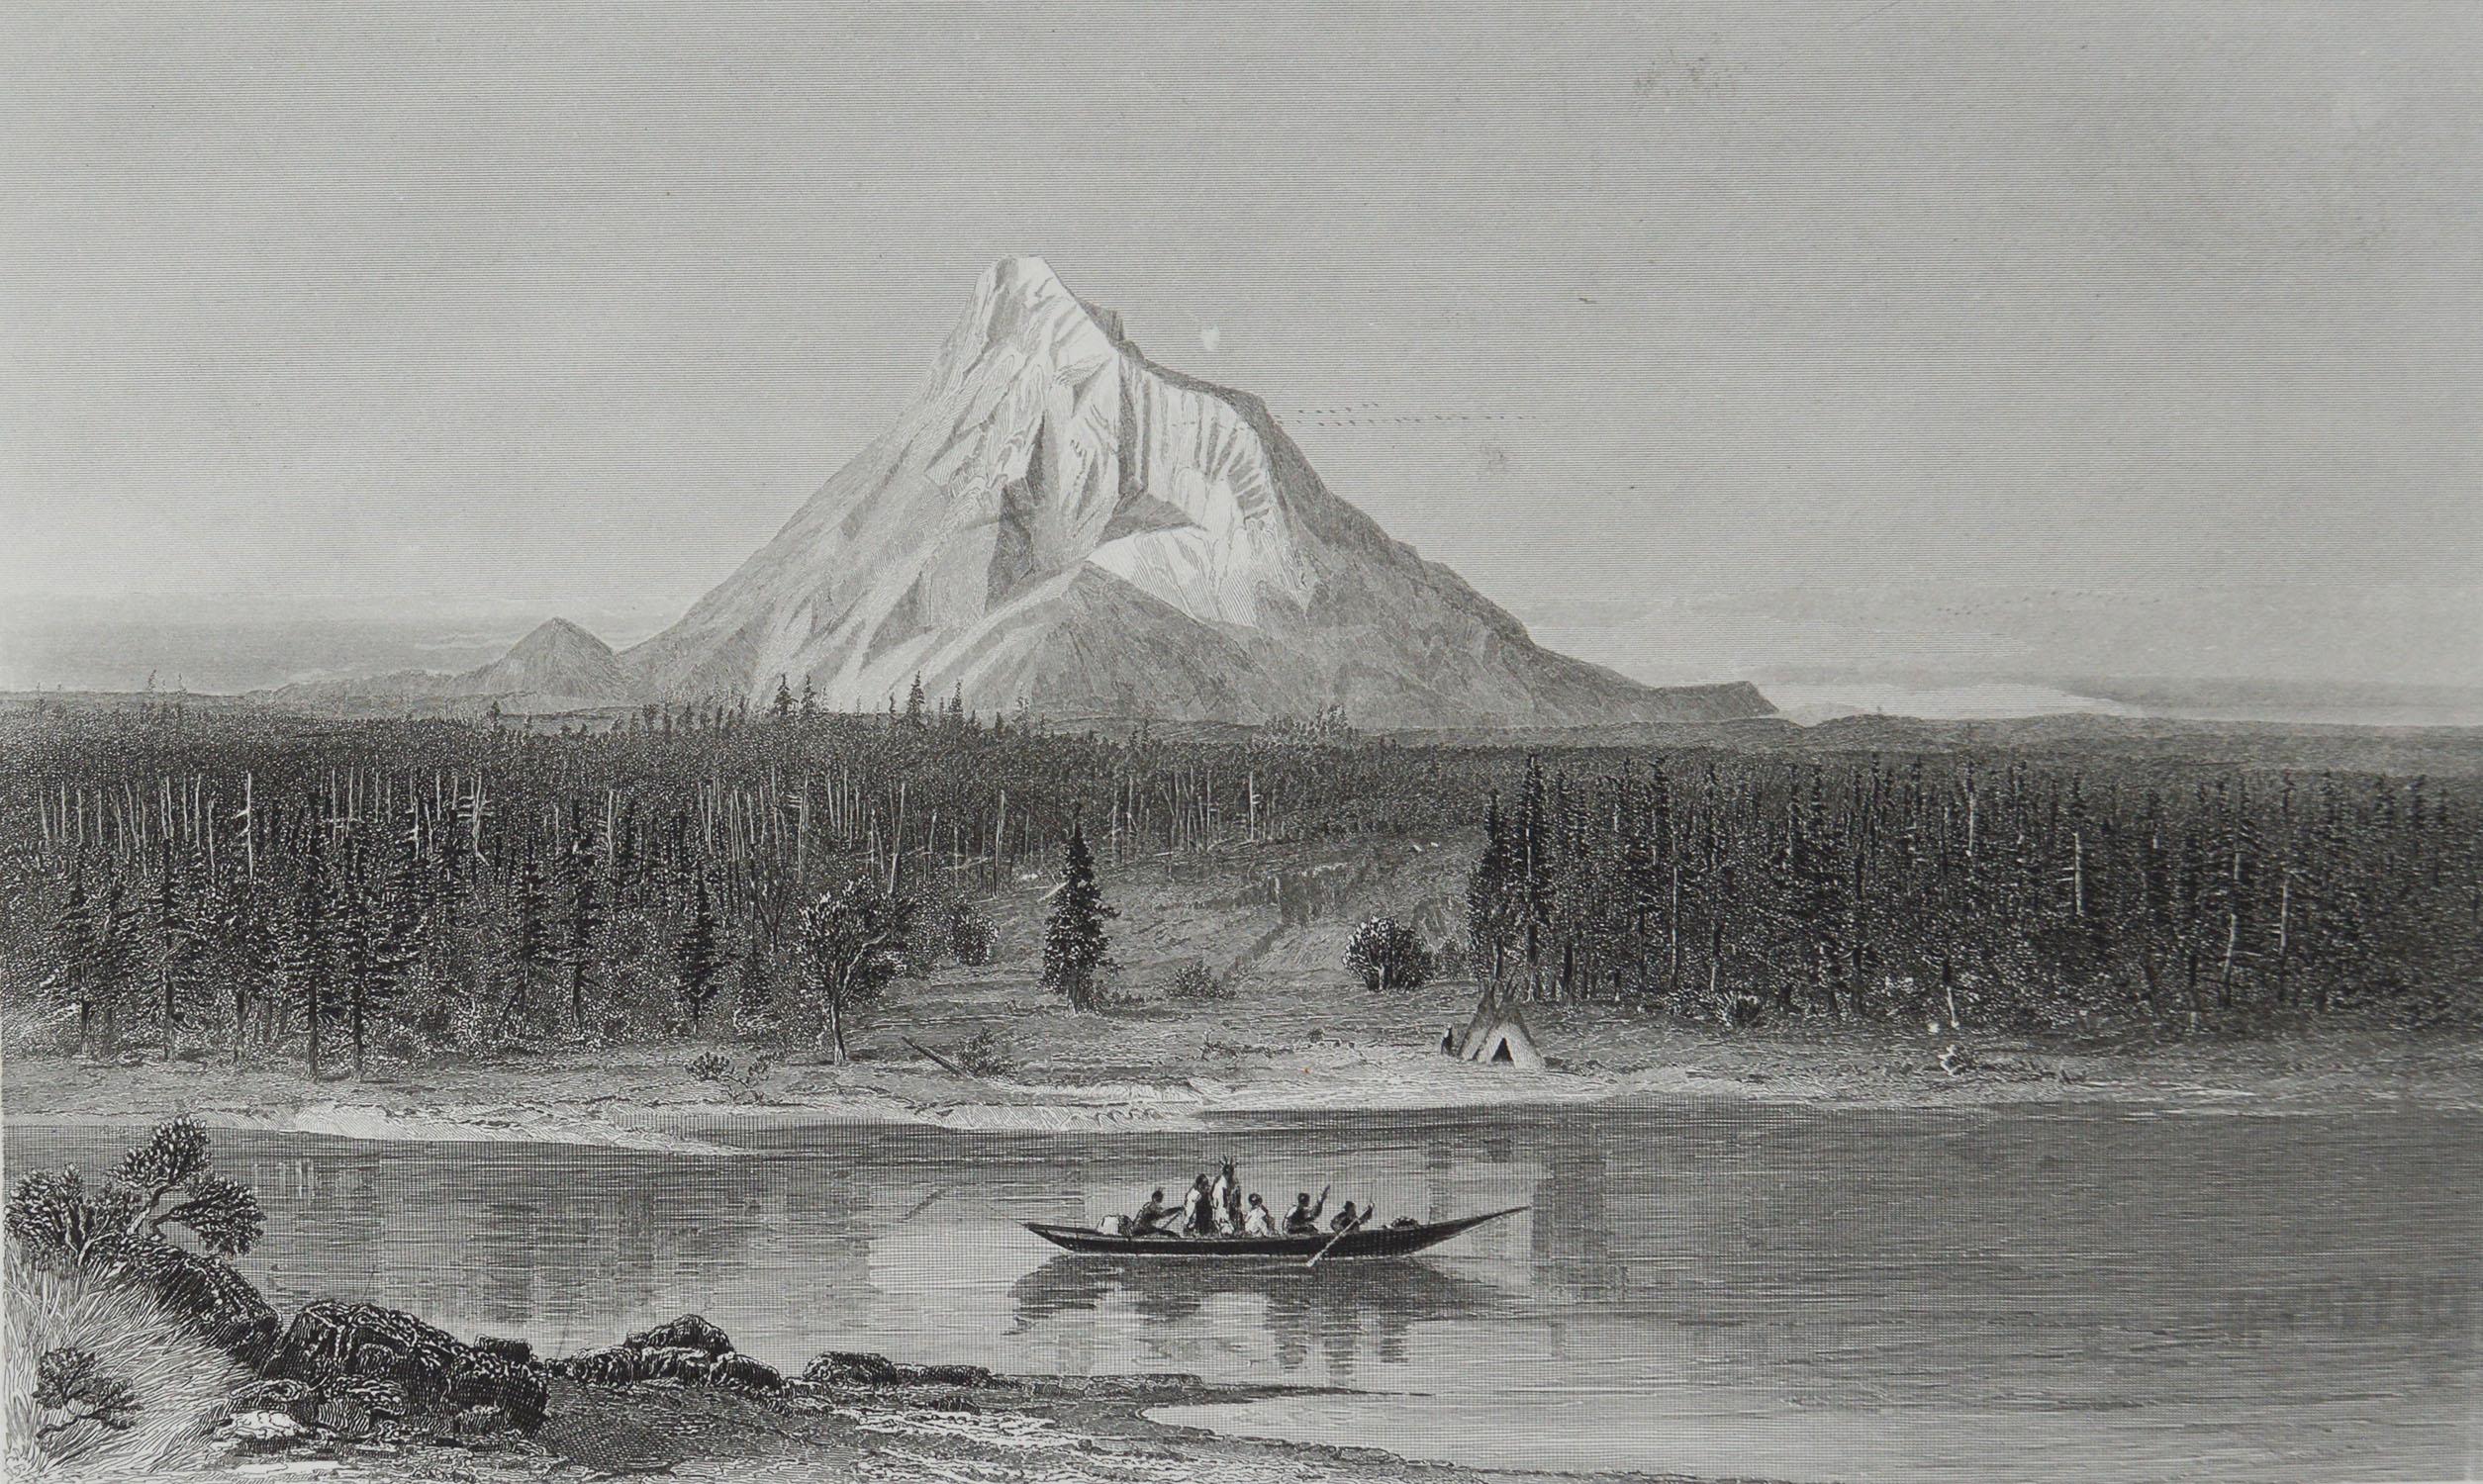 Other Original Antique Print of Mount Hood, Oregon, circa 1870